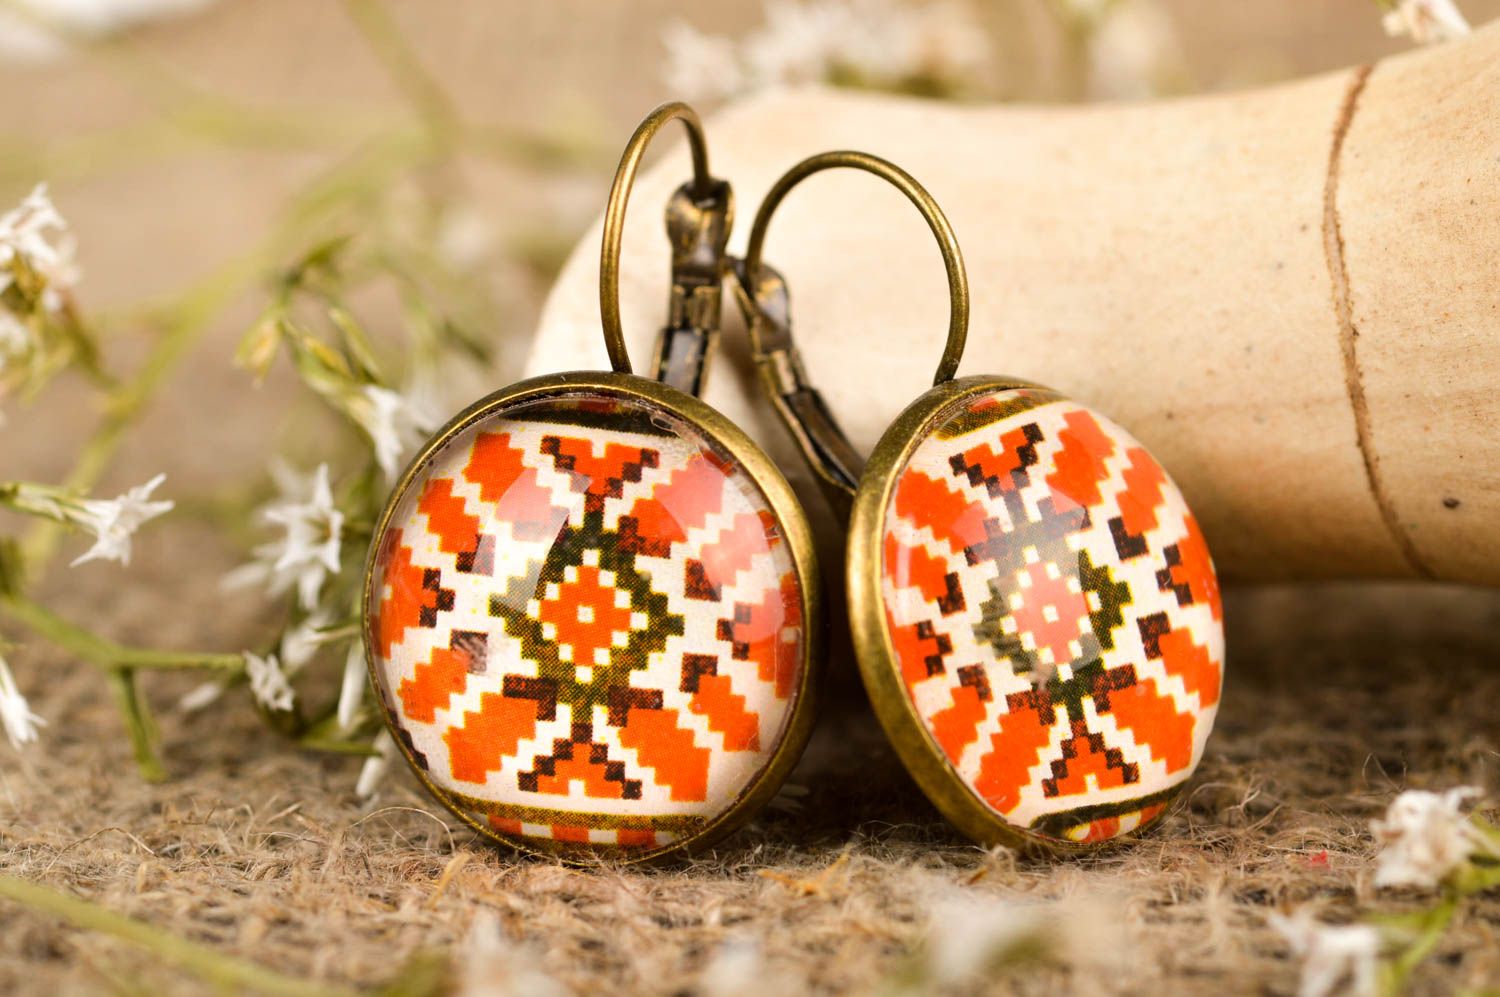 Handmade vintage earrings handmade jewelry earrings with print fashion jewelry photo 1